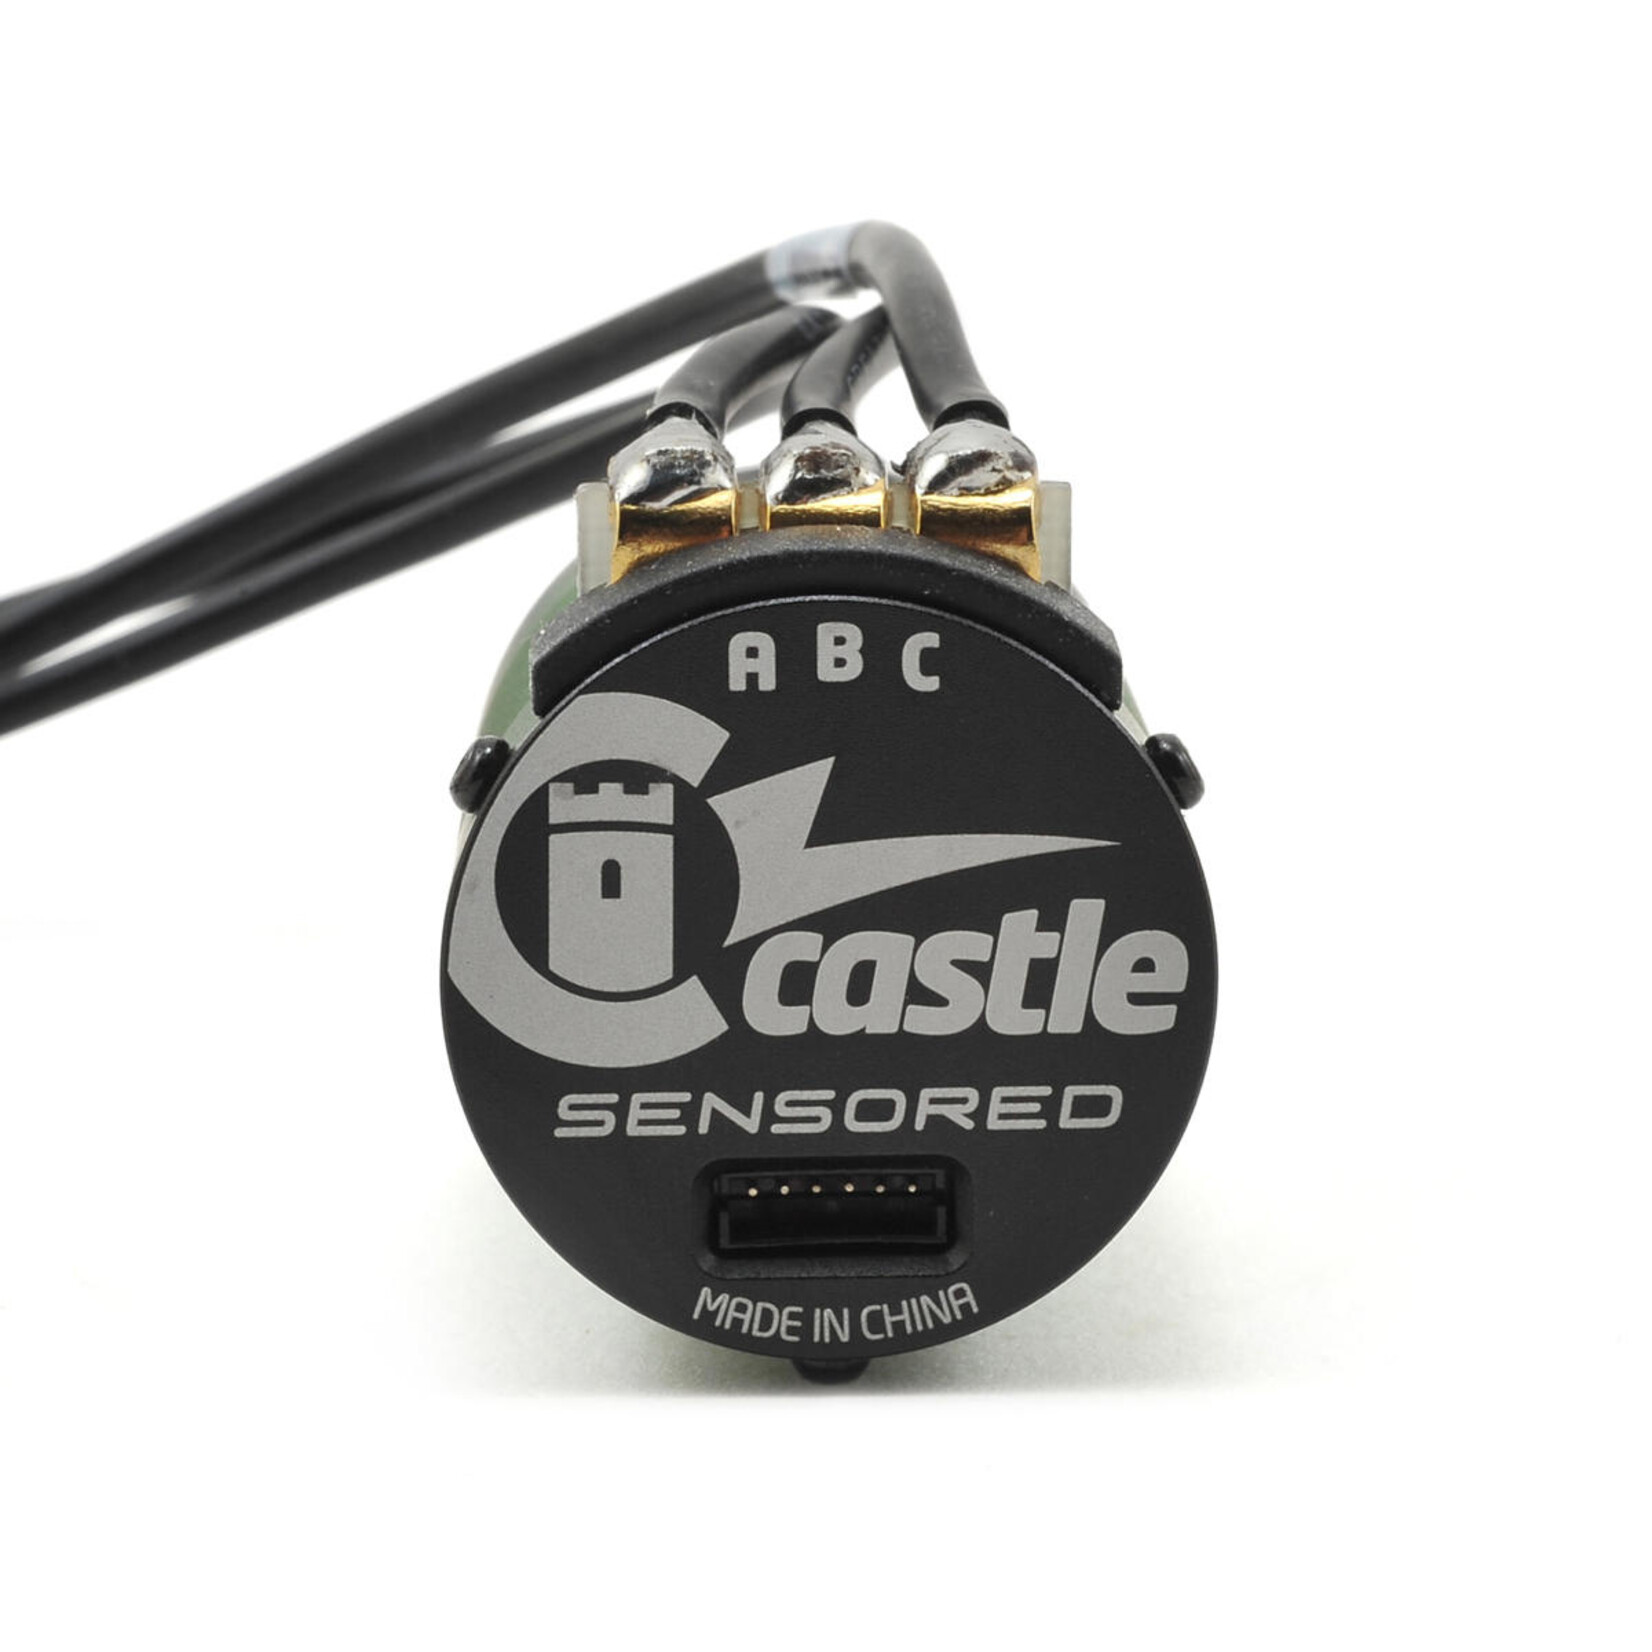 Castle Creations Castle Creations Cobra 8 6S 1/8 Scale Brushless Motor & ESC Combo (2200Kv) w/1515 V2 Sensored Motor (Limited Edition Gold) #010-0172-04